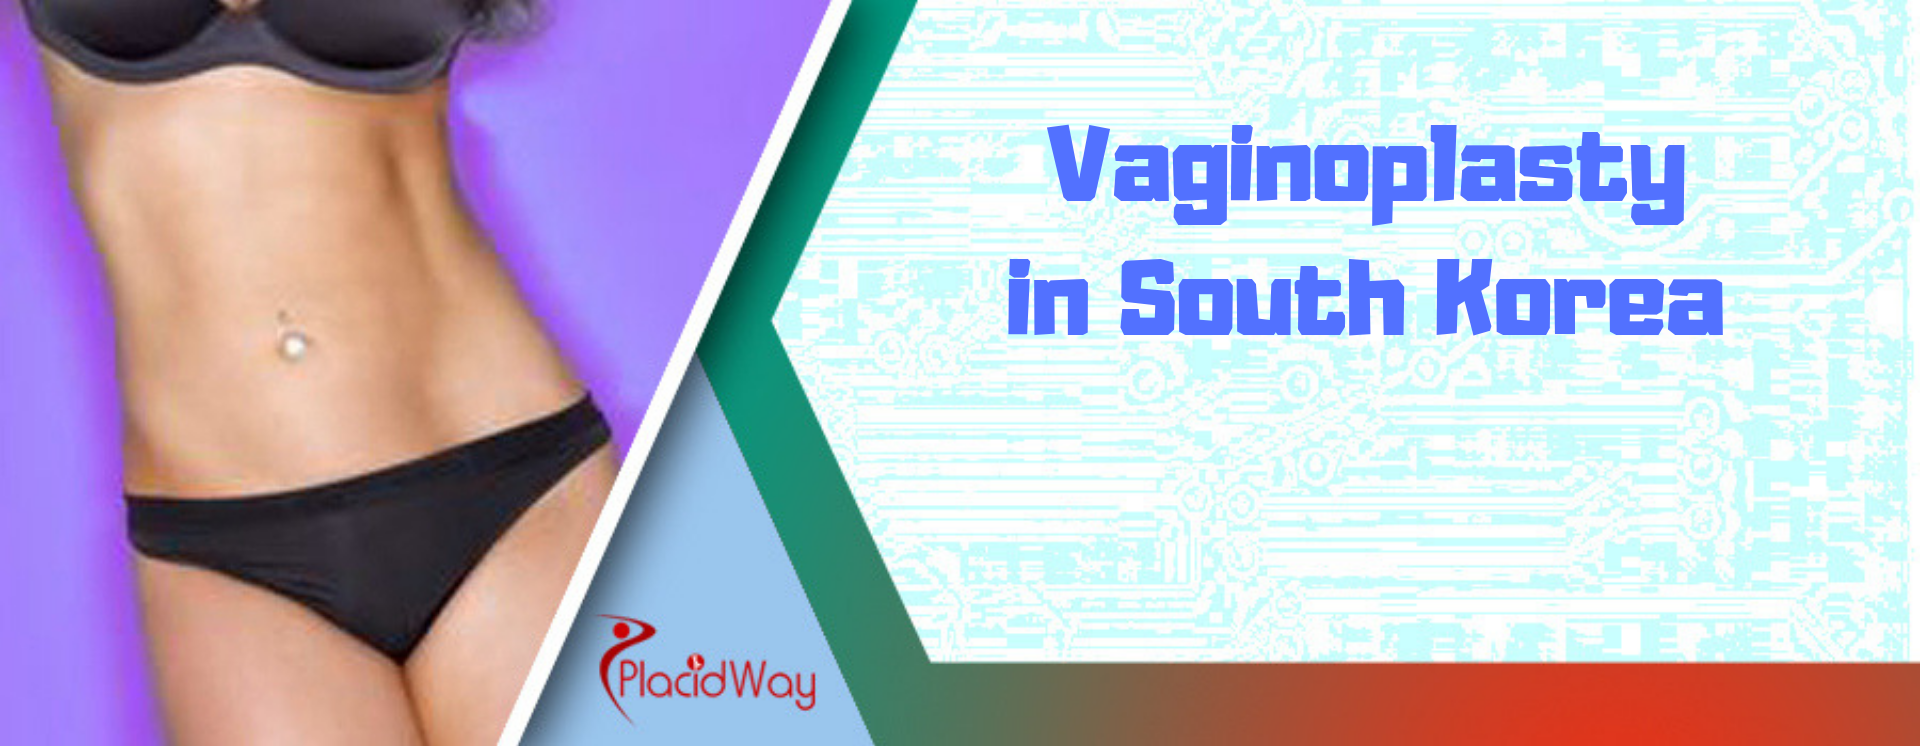 vaginoplasty in south korea